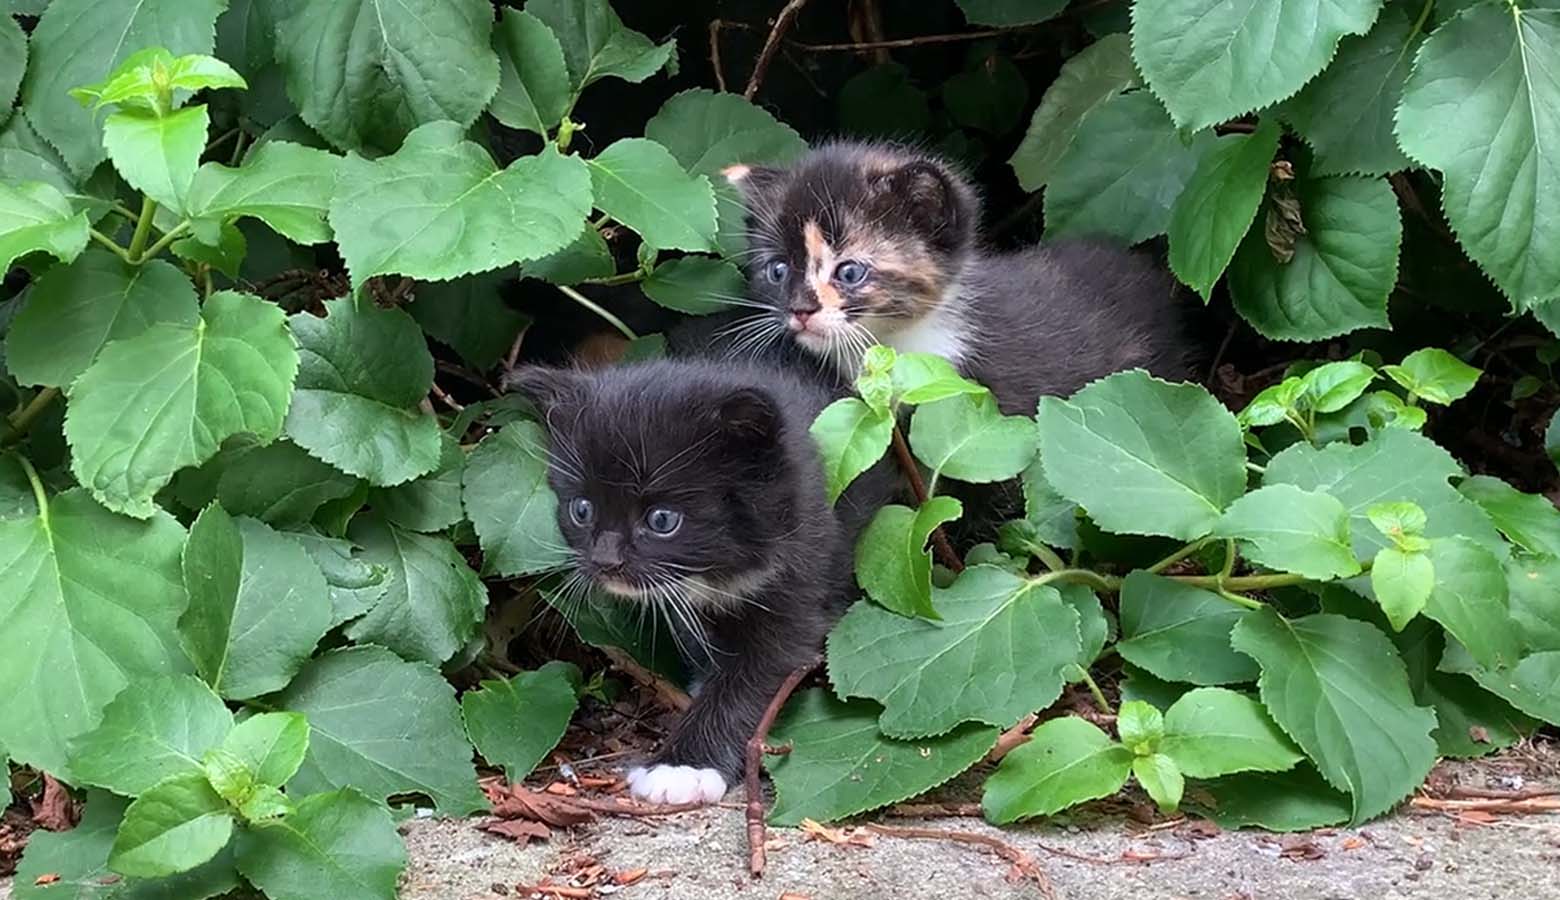 Finding newborn kittens in your garden